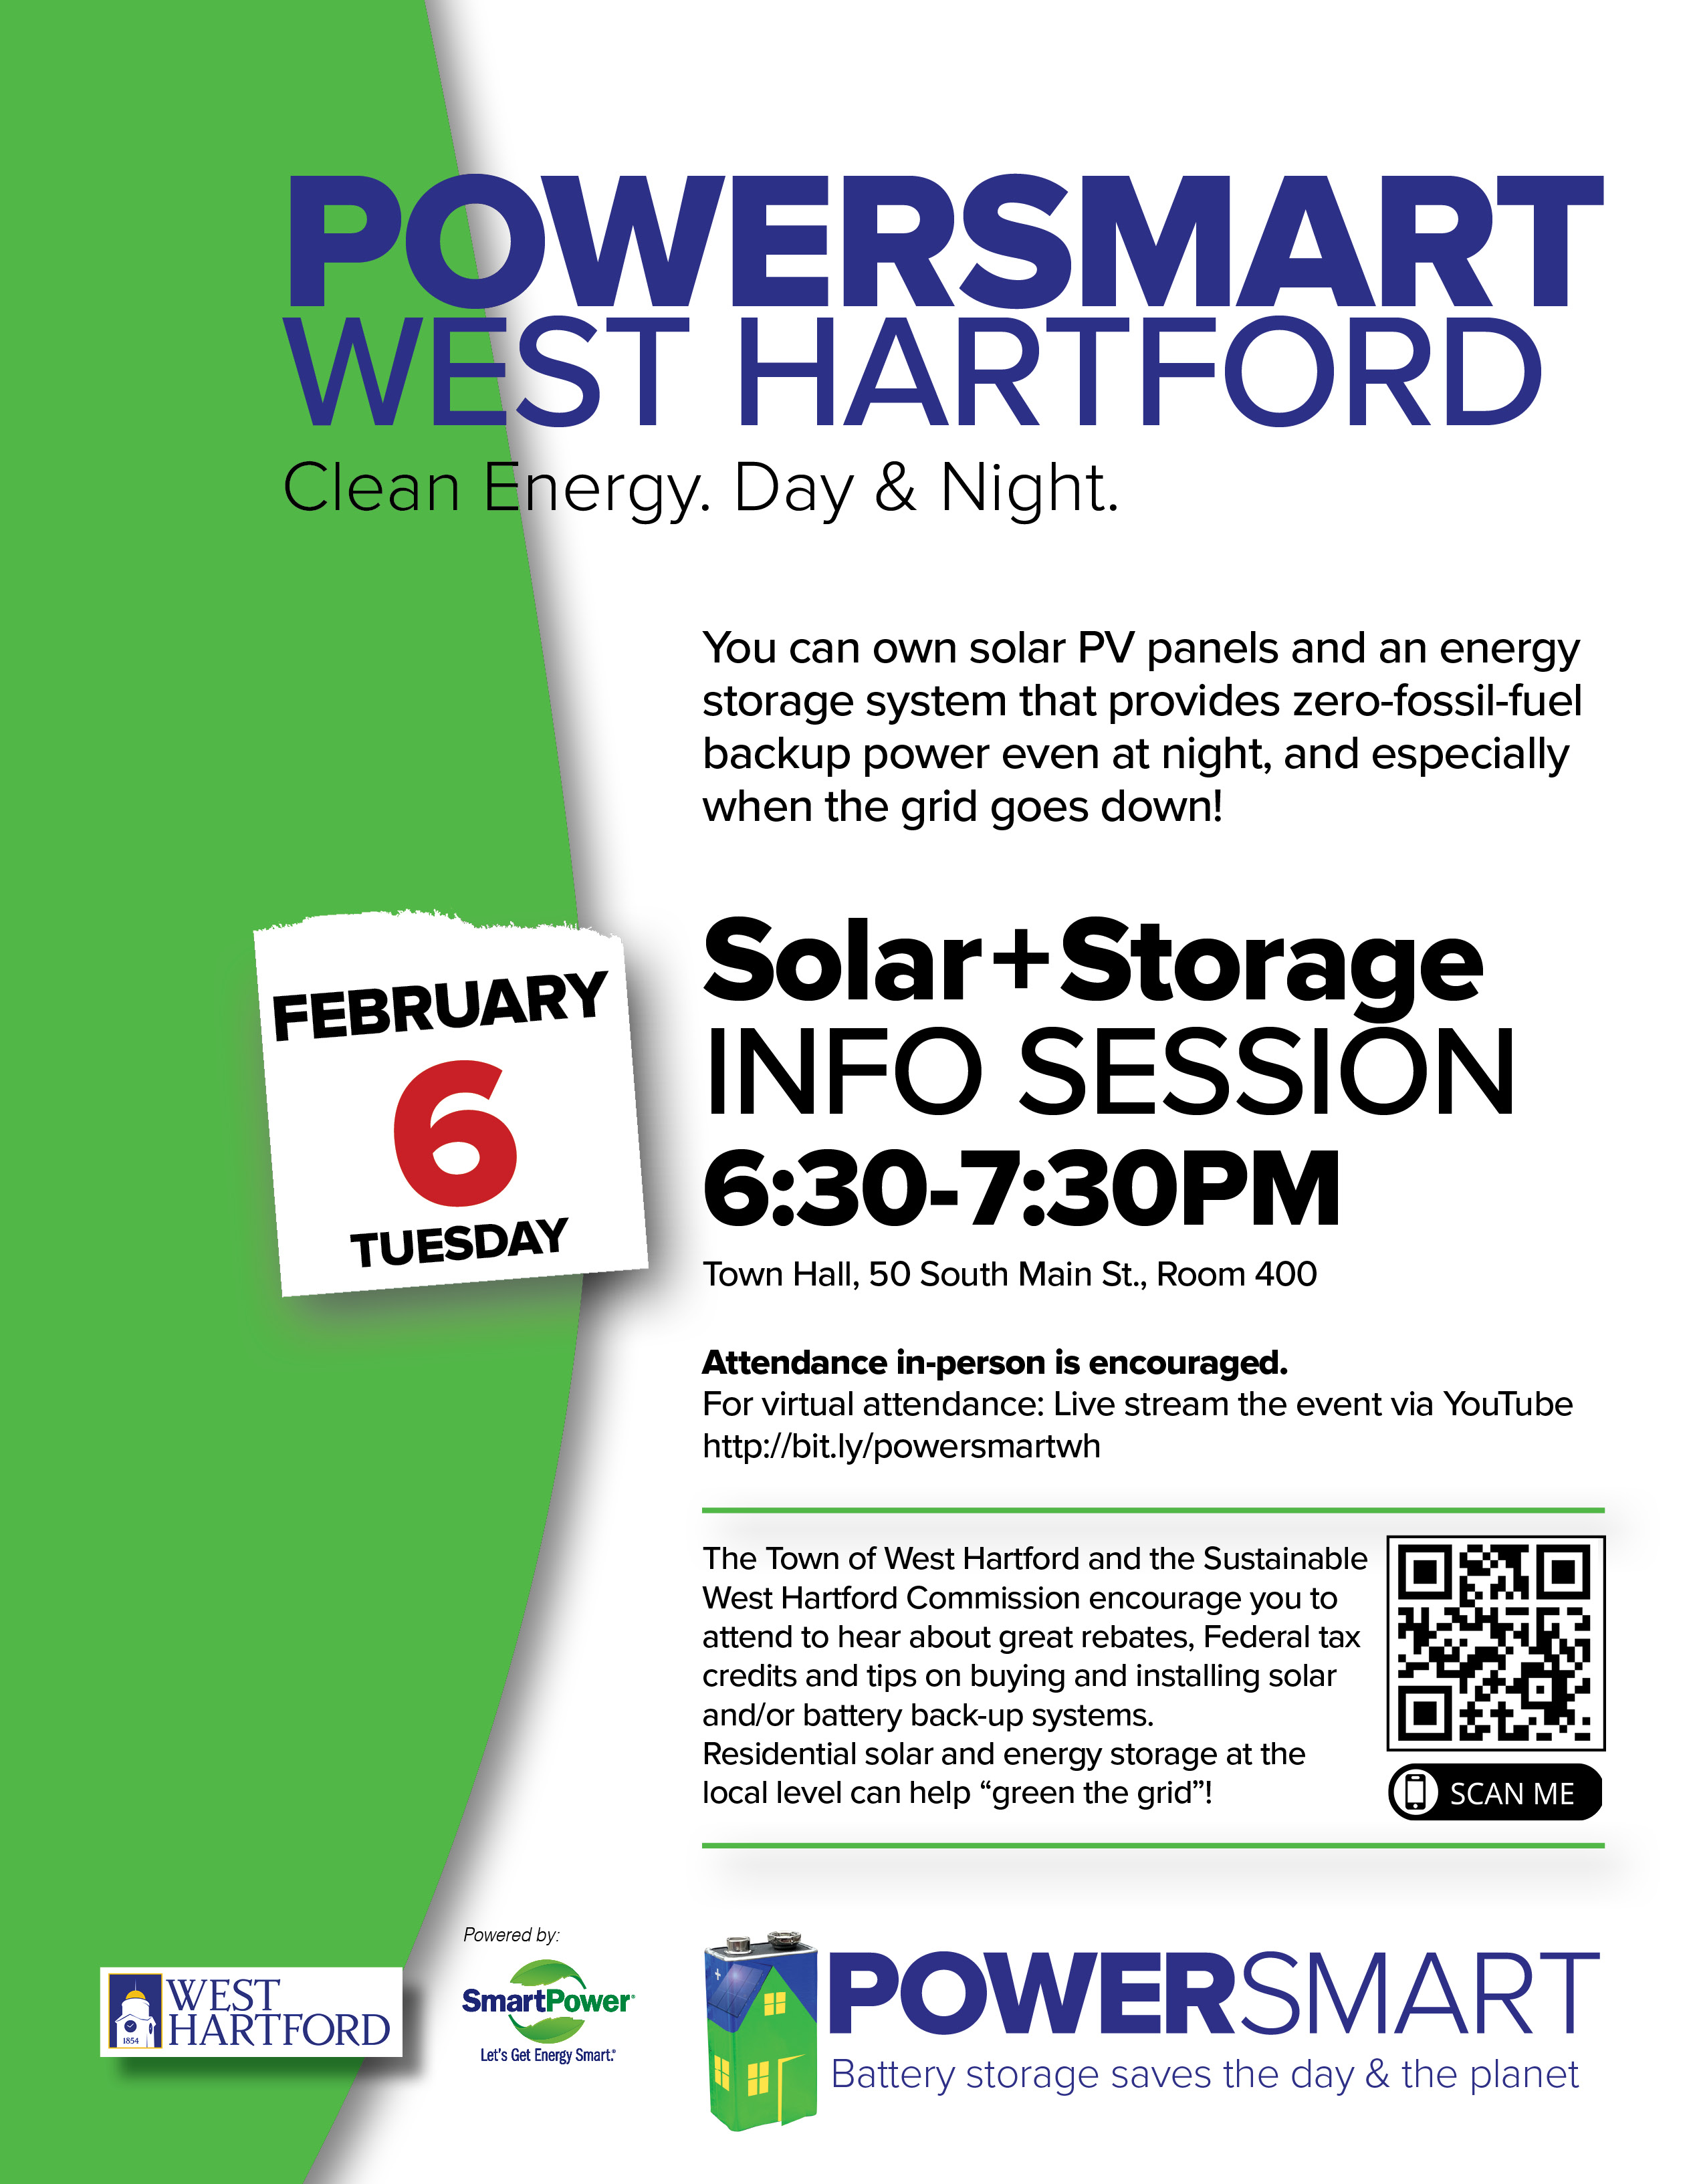 Solar + Storage Info Session